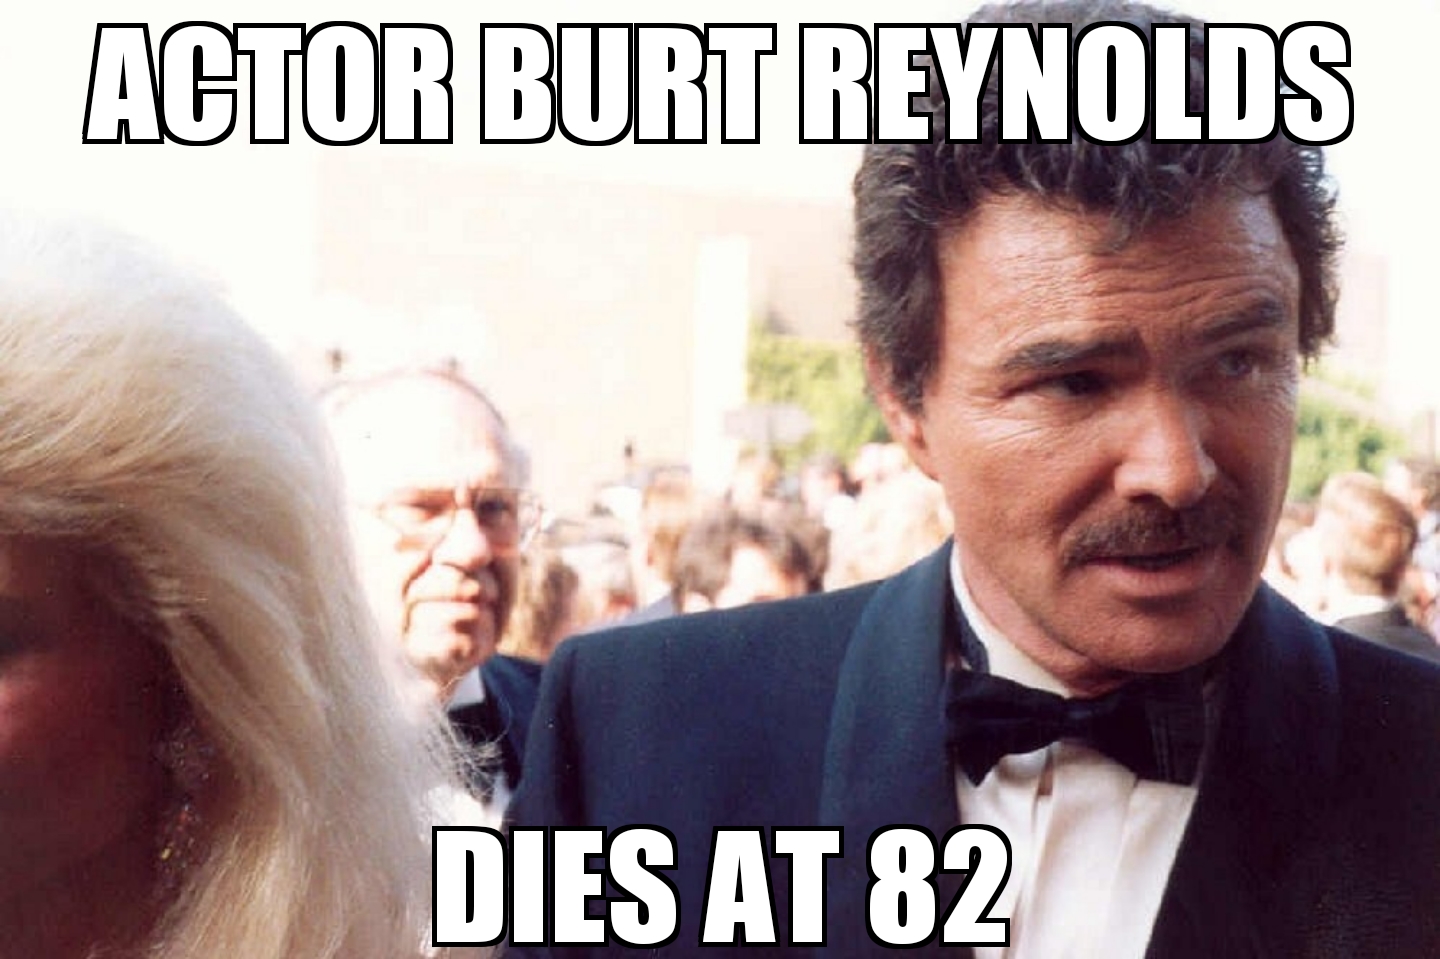 Burt Reynolds dies